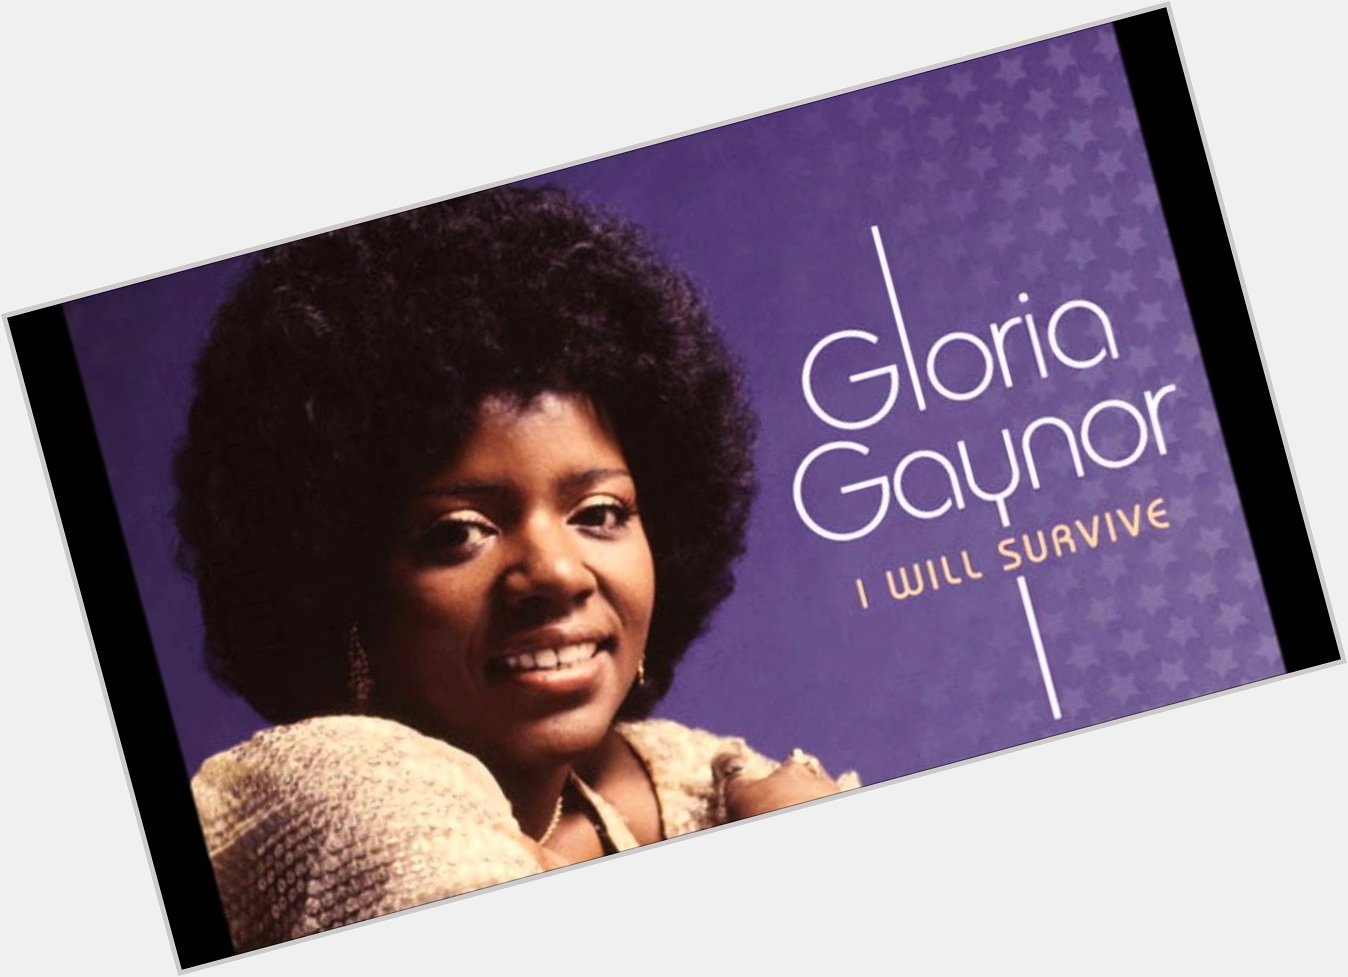 September 7, 2020
Happy birthday to American singer Gloria Gaynor 77 years old. 